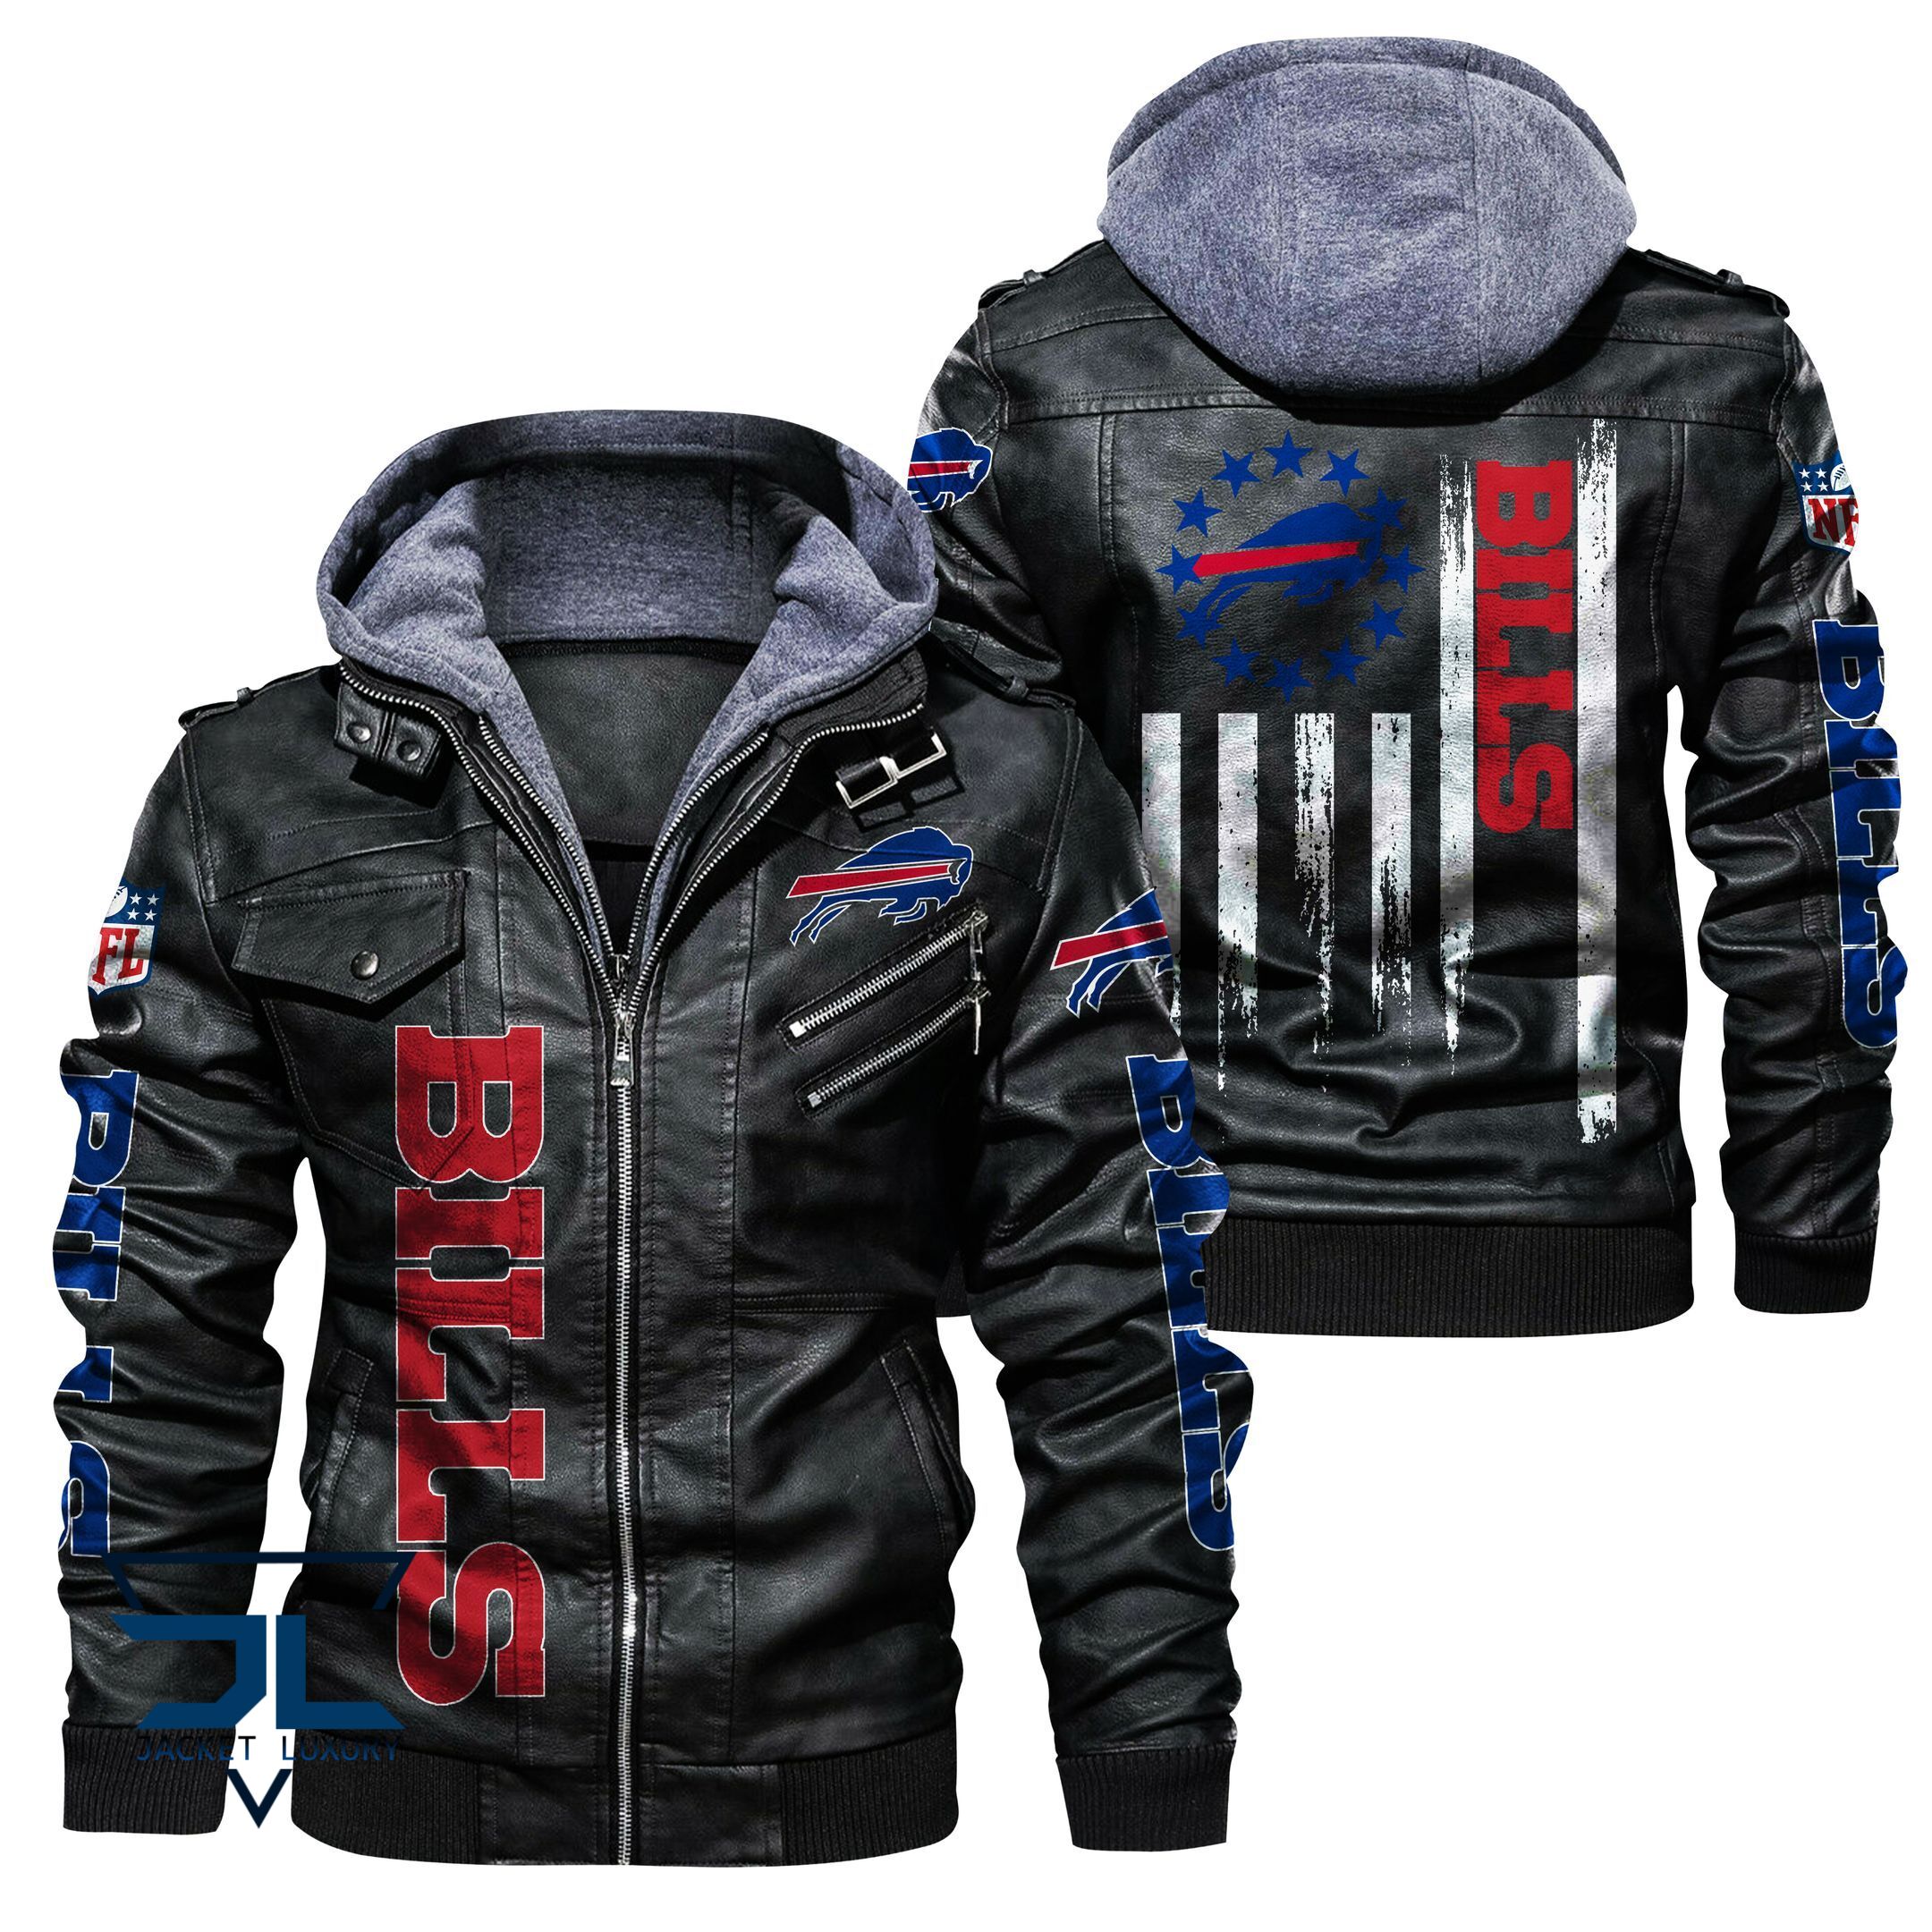 What Leather jacket Sells Best on Techcomshop? 103